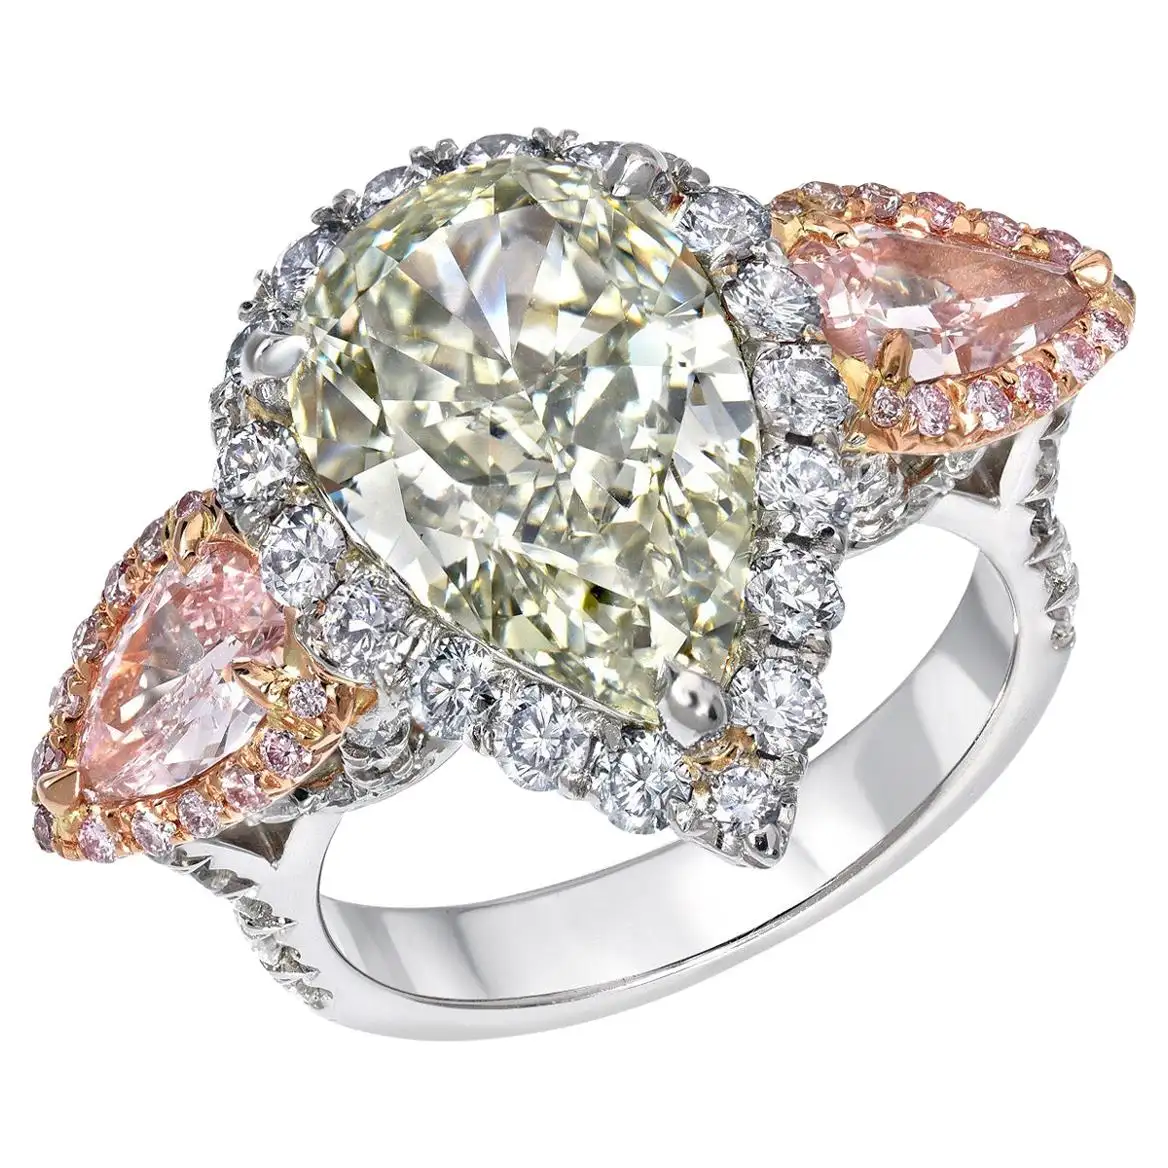 Green-Diamond-Ring-5.16-Carat-Pear-Shape-GIA-Certified-1.webp